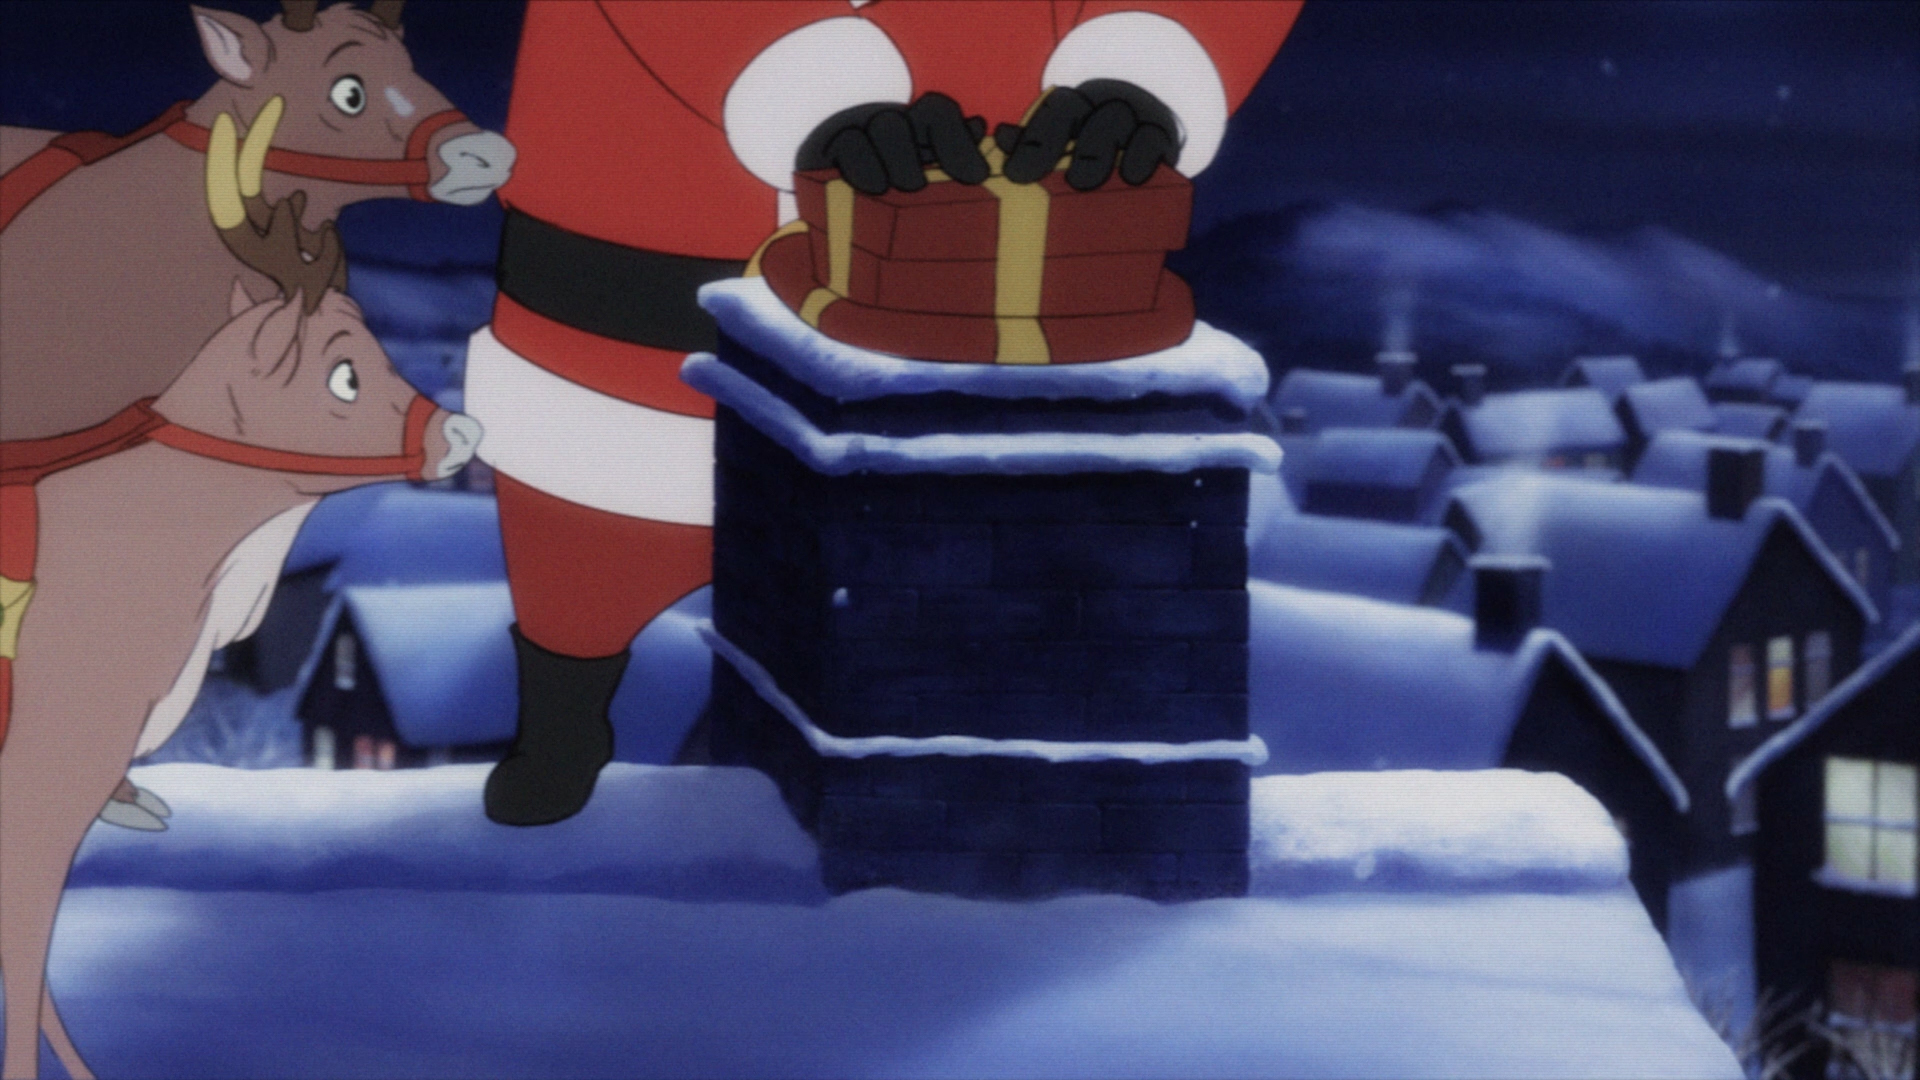 Illustration of Santa pushing present down chimney